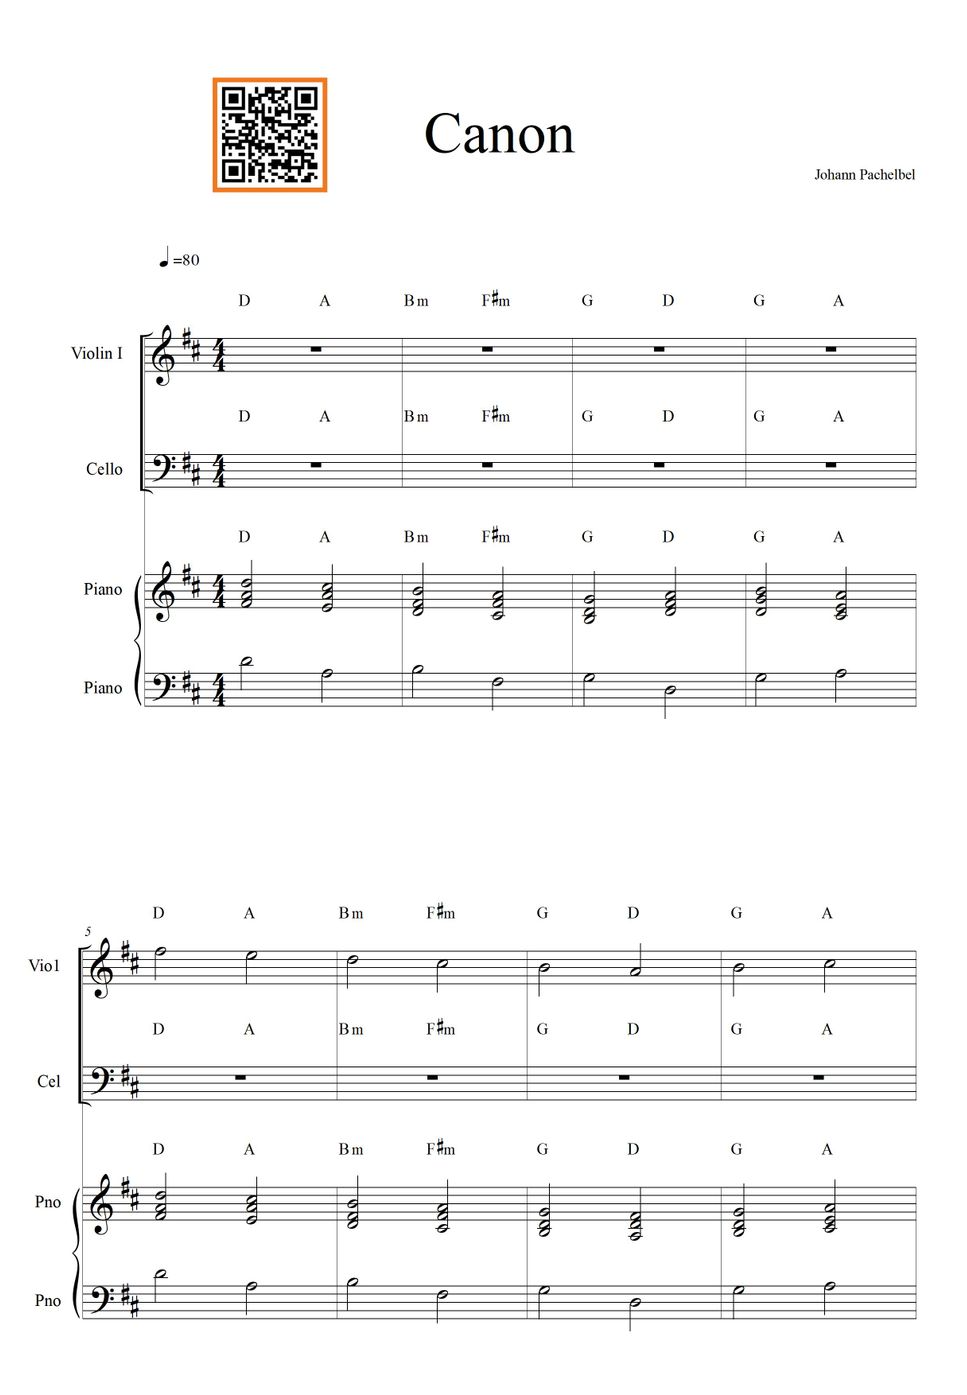 Johann Pachelbel - Canon (피아노3중주 / 현악 / 편곡 / 코드 / 파트보) by Akbo1004